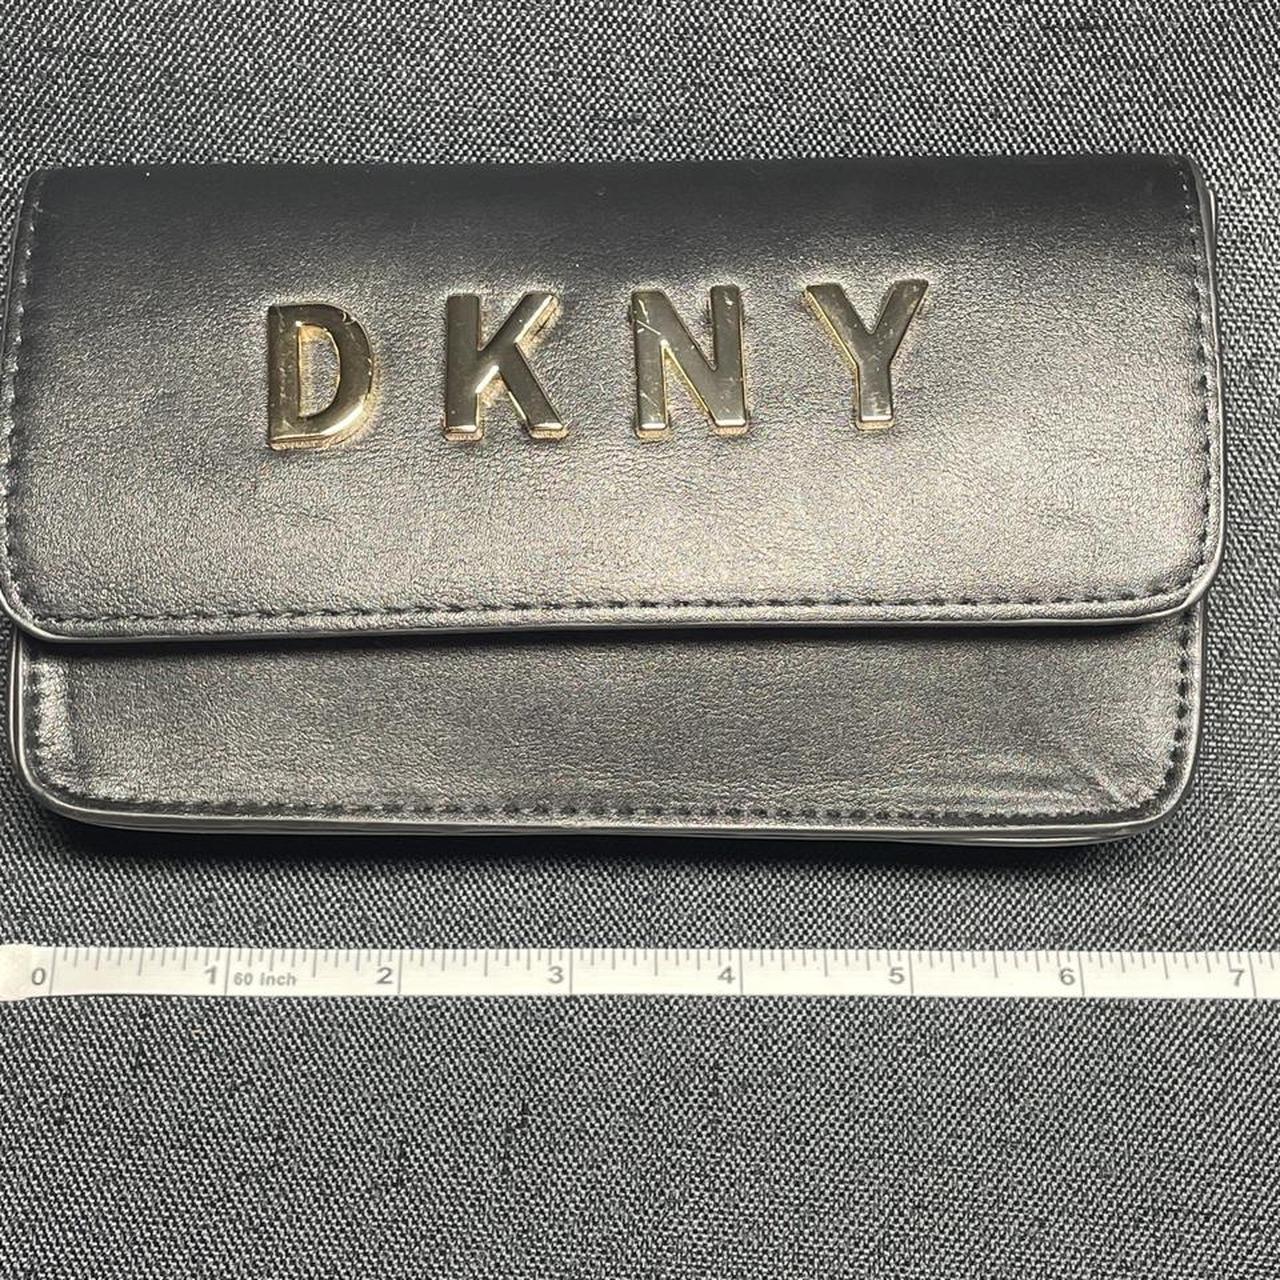 Product Image 1 - DKNY Belt Bag without belt

📦